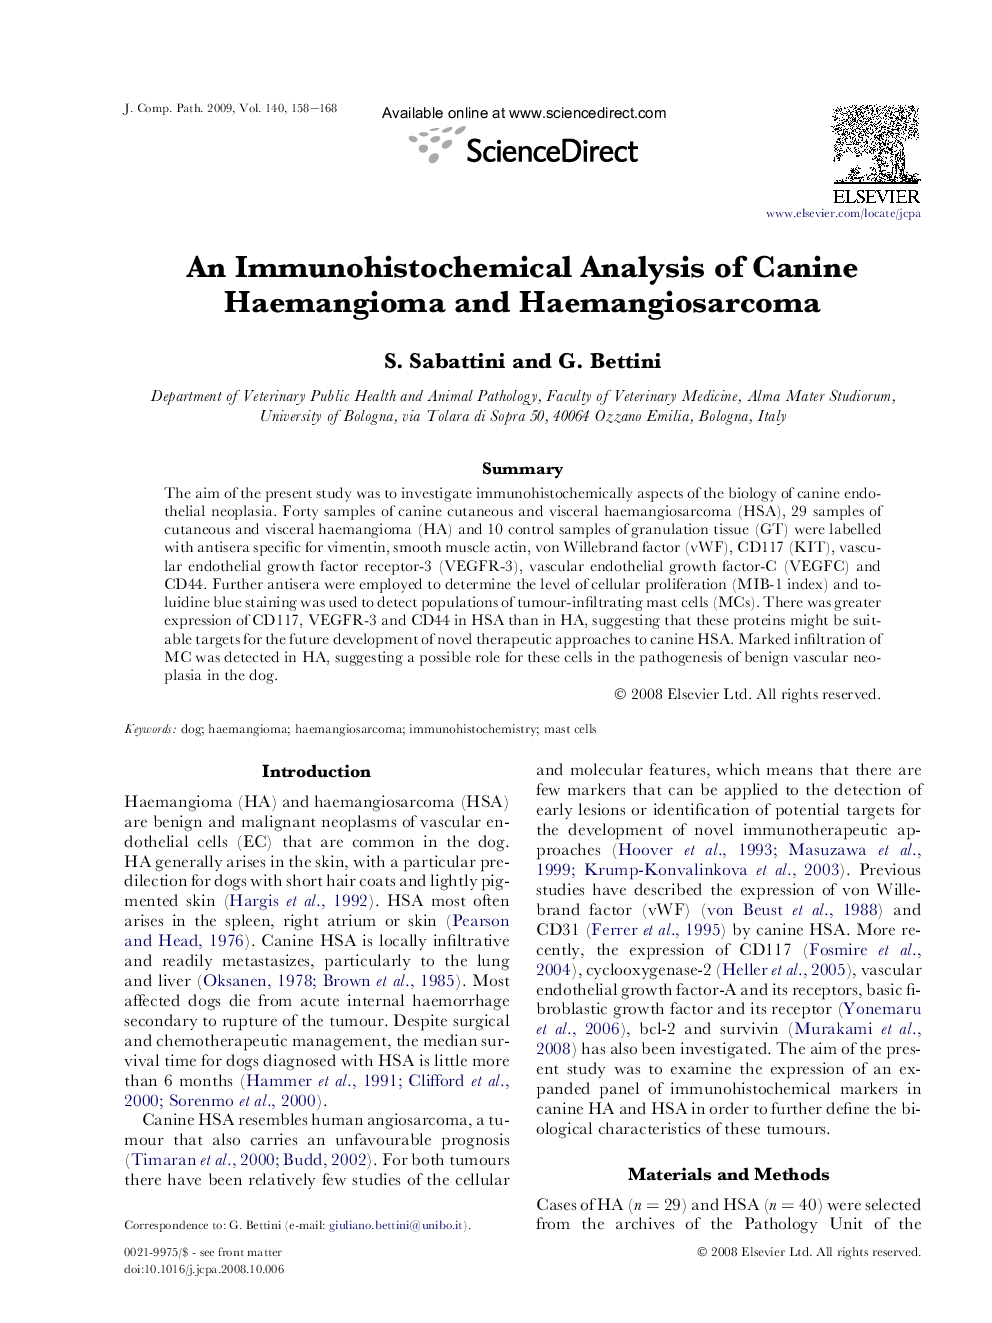 An Immunohistochemical Analysis of Canine Haemangioma and Haemangiosarcoma